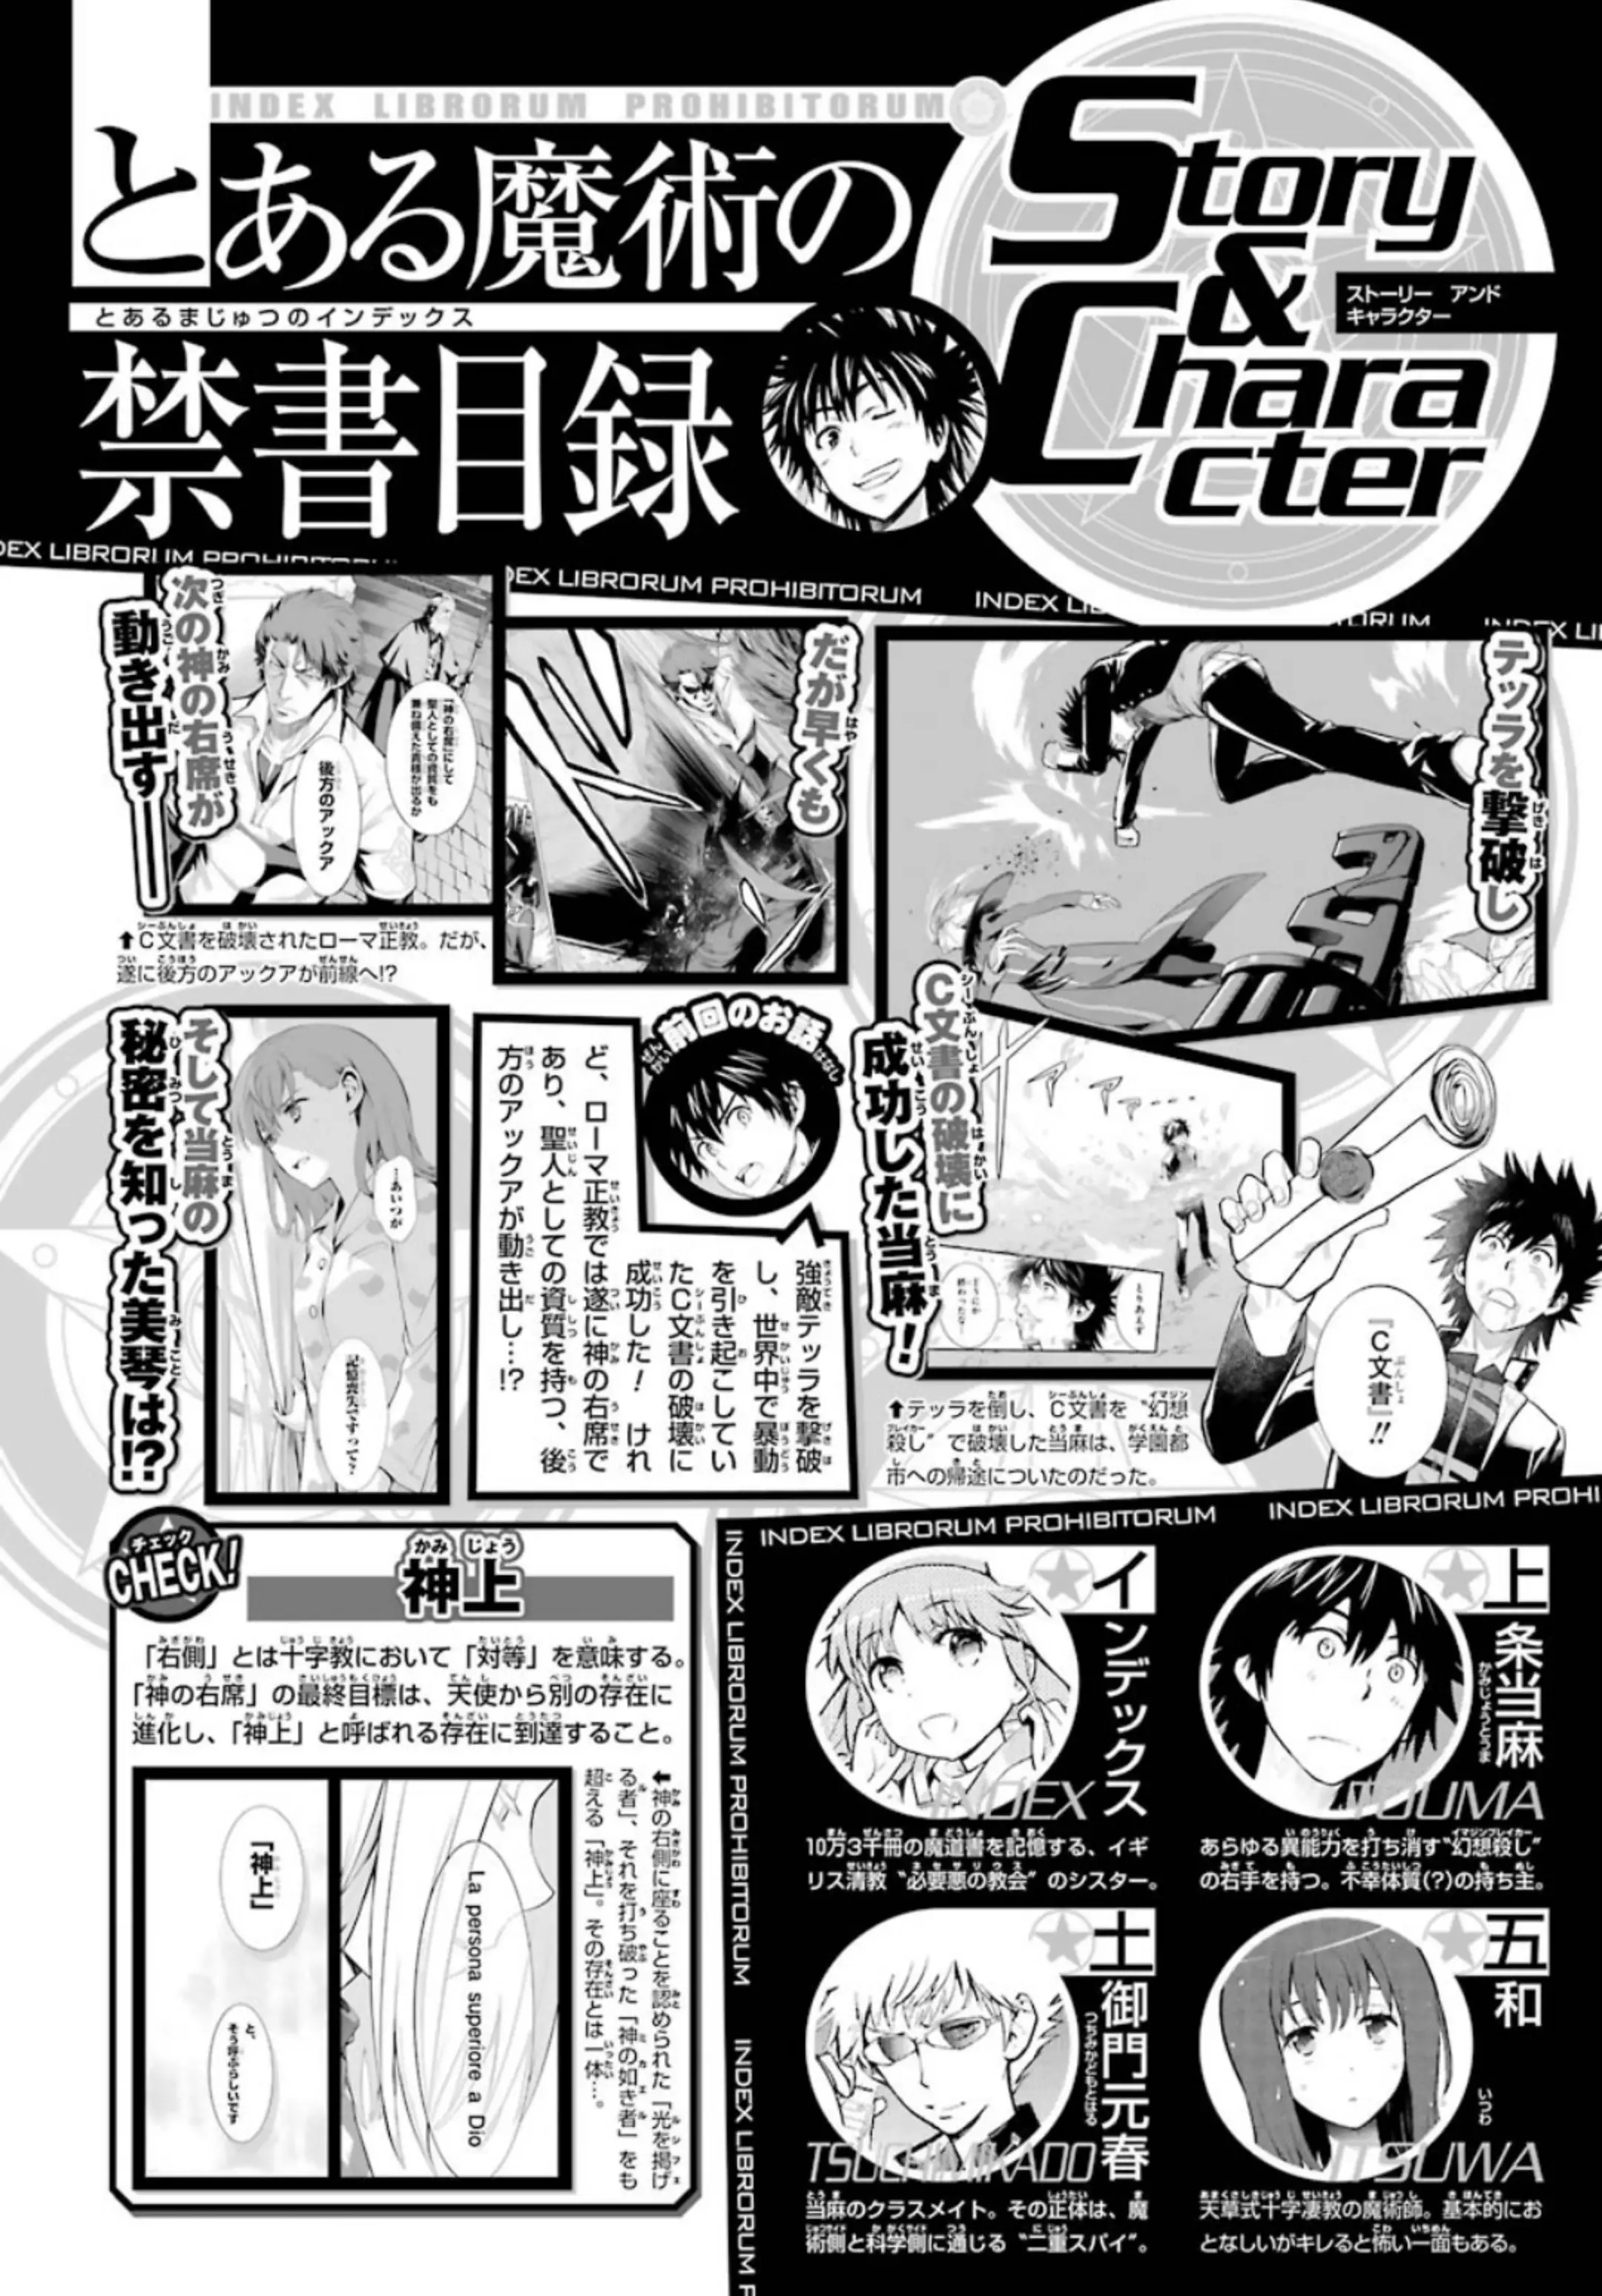 Toaru Majutsu No Index - 4Koma Koushiki Anthology - 133 page 1